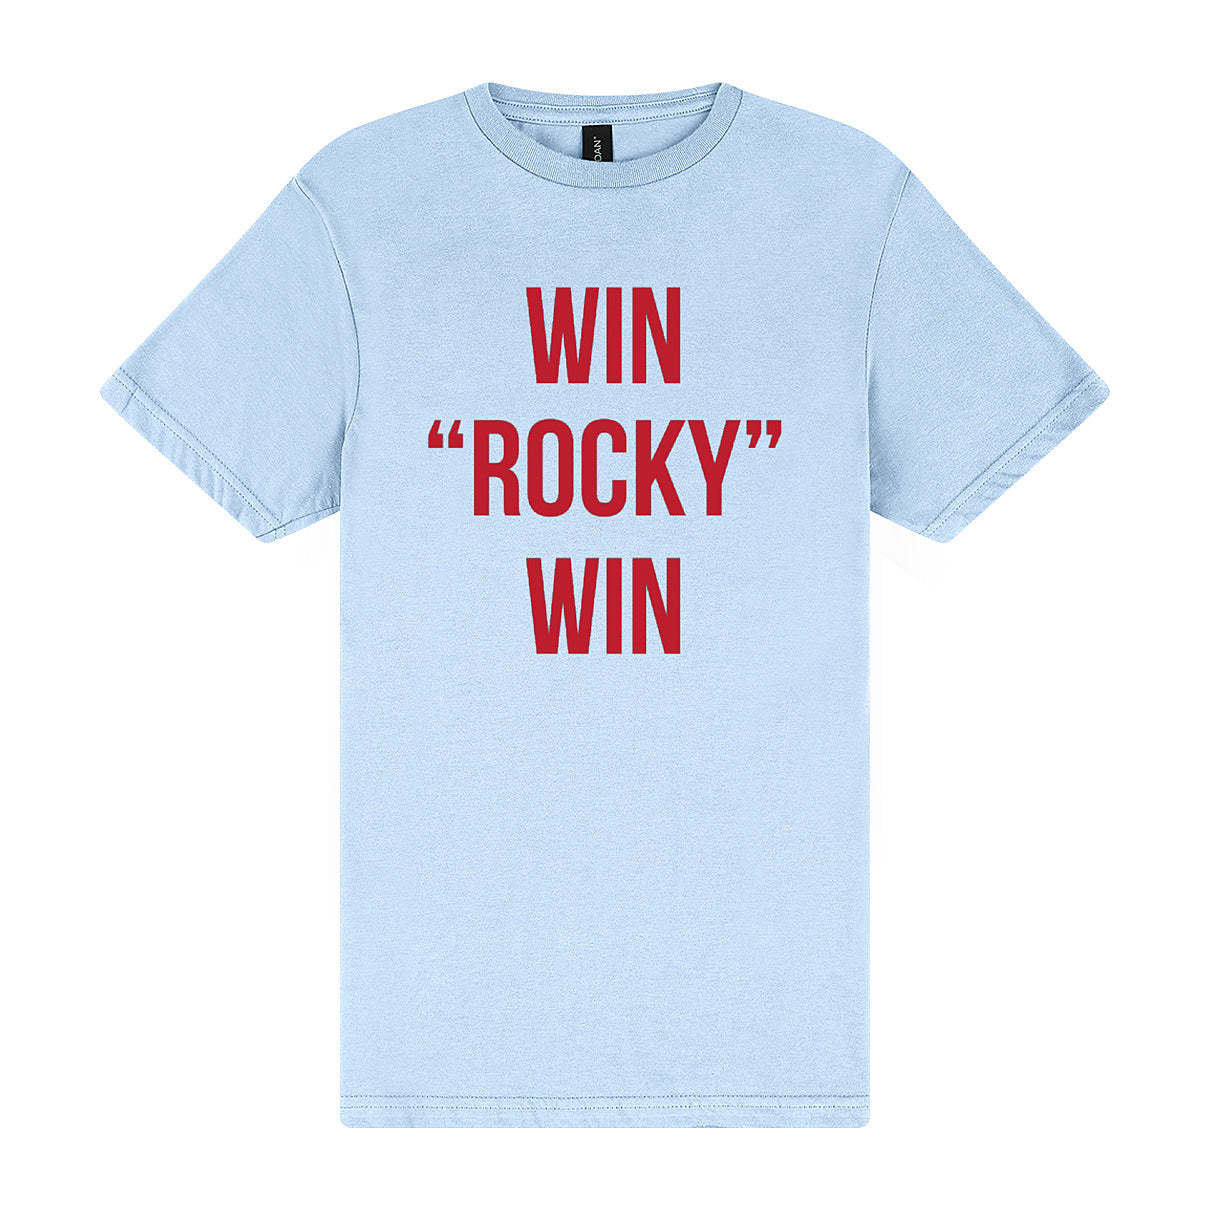 Win Rocky Win Tee